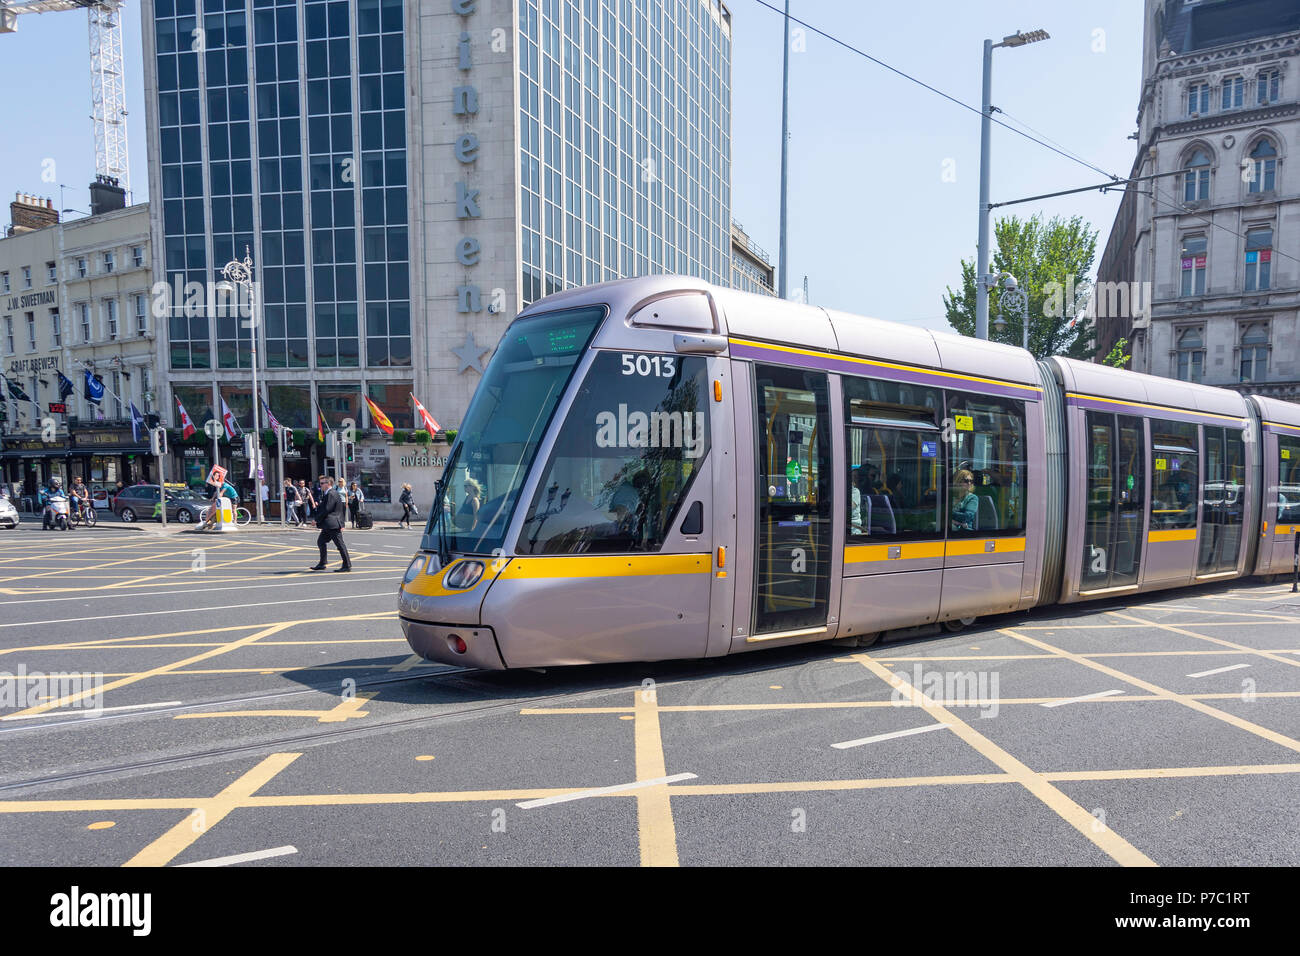 Luas tram/light rail transport system, O'Connell Street Lower, Dublin, Republic of Ireland Stock Photo